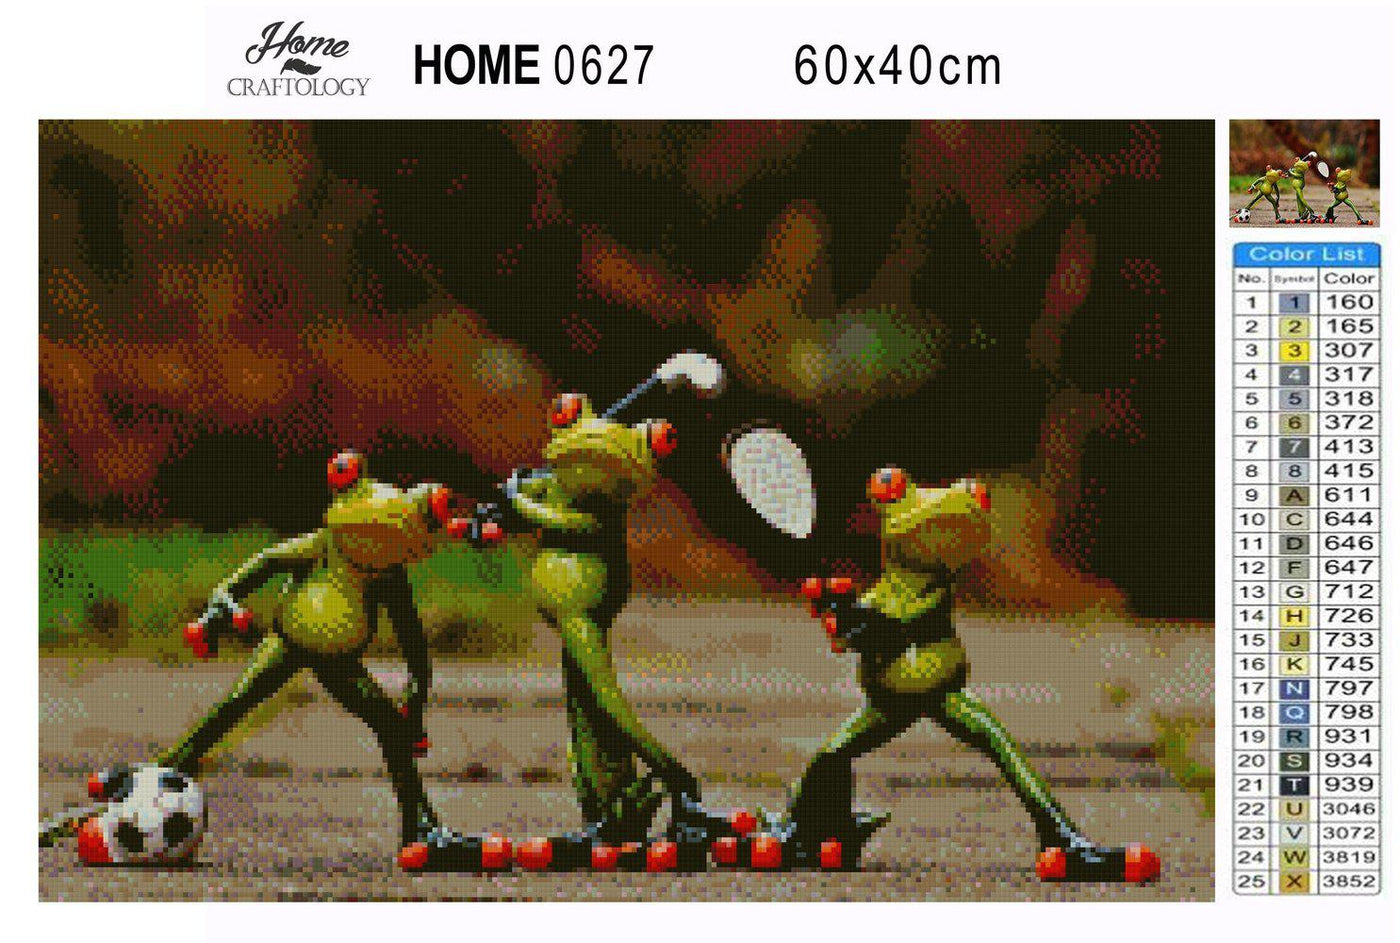 Frogs Playing Sports - Premium Diamond Painting Kit